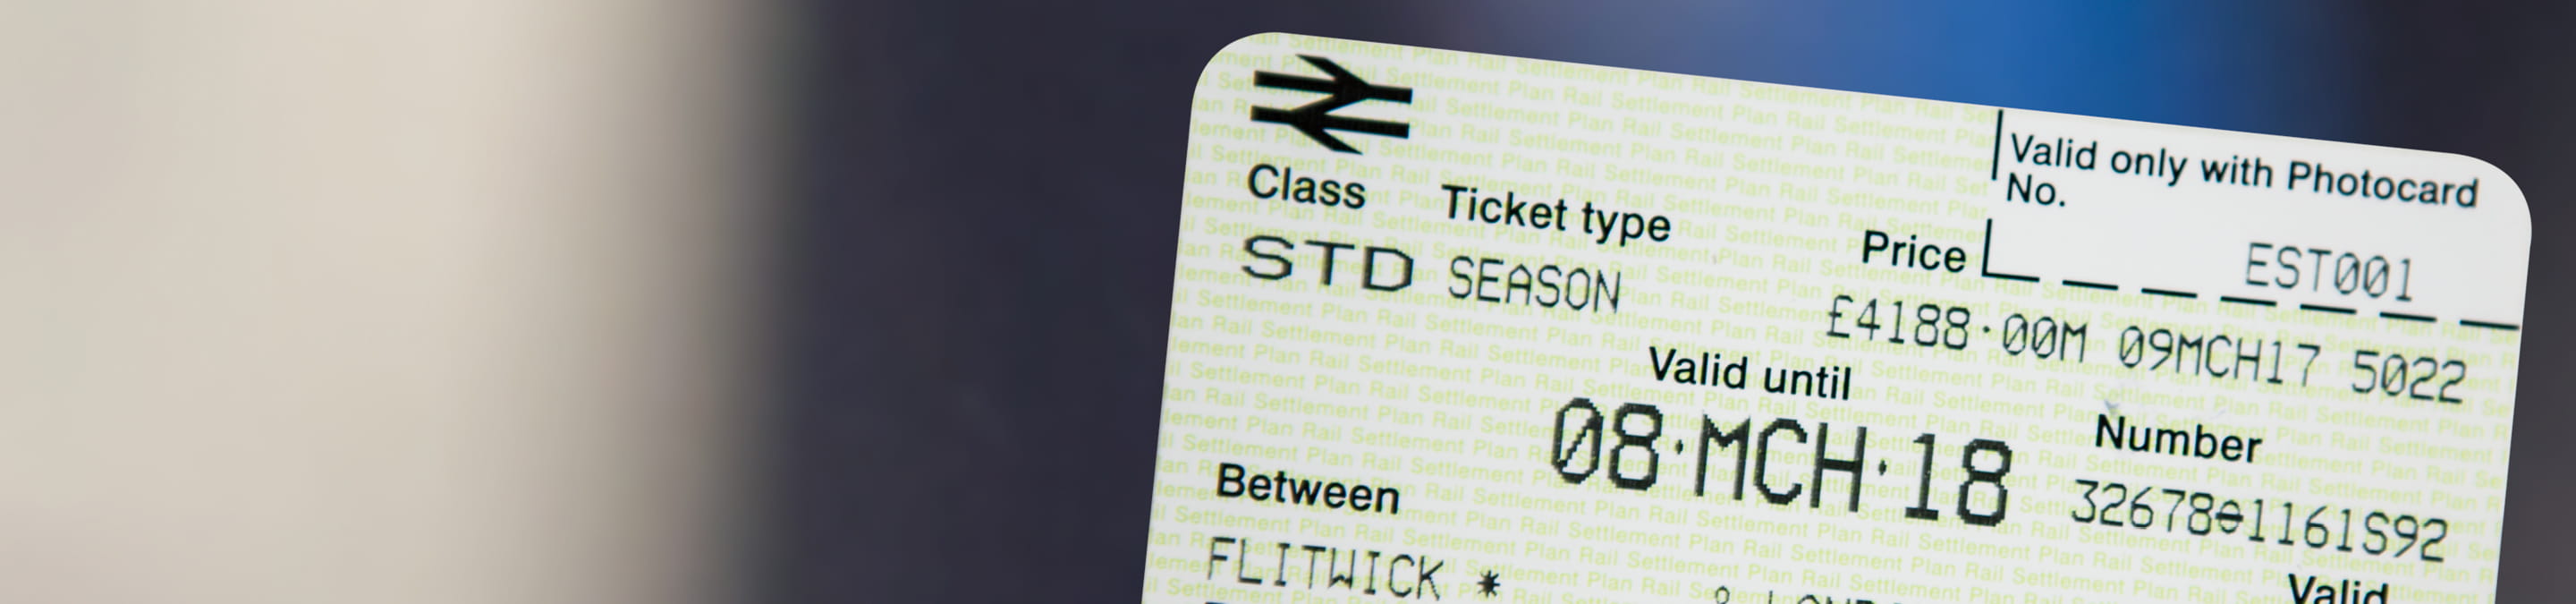 Explore the season ticket options available on Thameslink